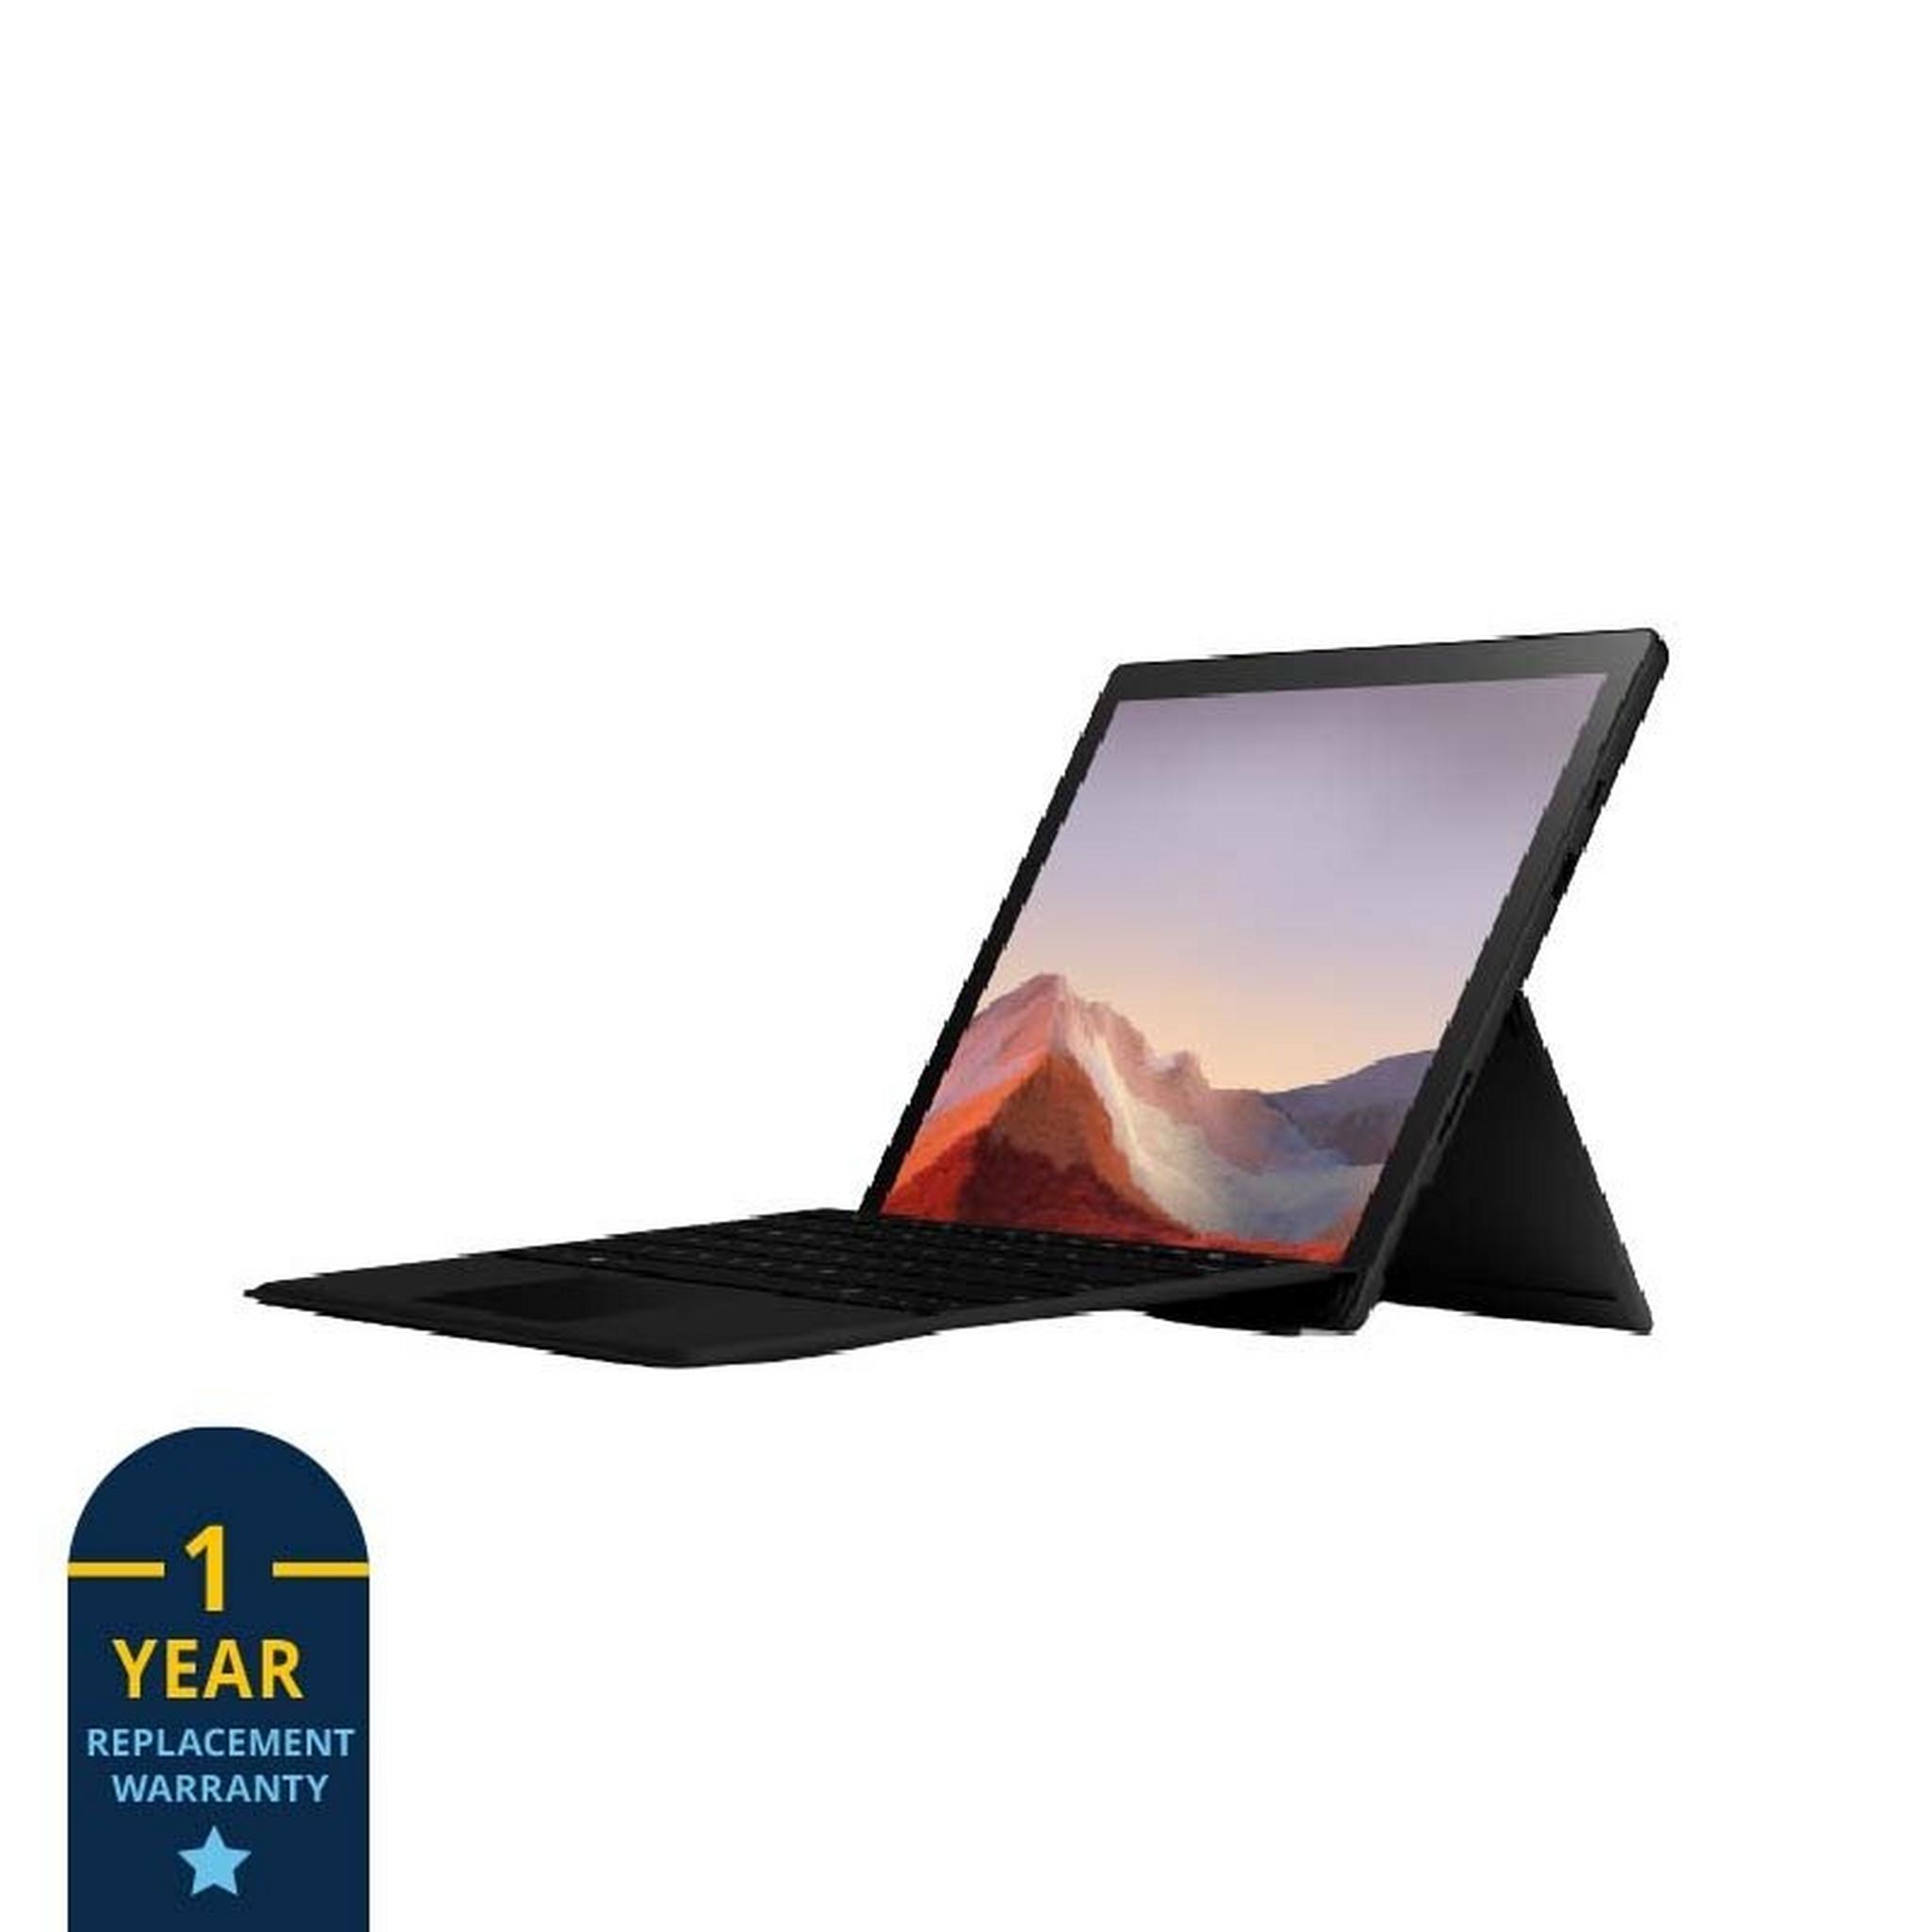 Microsoft Surface Pro 7 Core i7 16GB RAM 256GB SSD 12.3-inch Convertible Laptop - Black